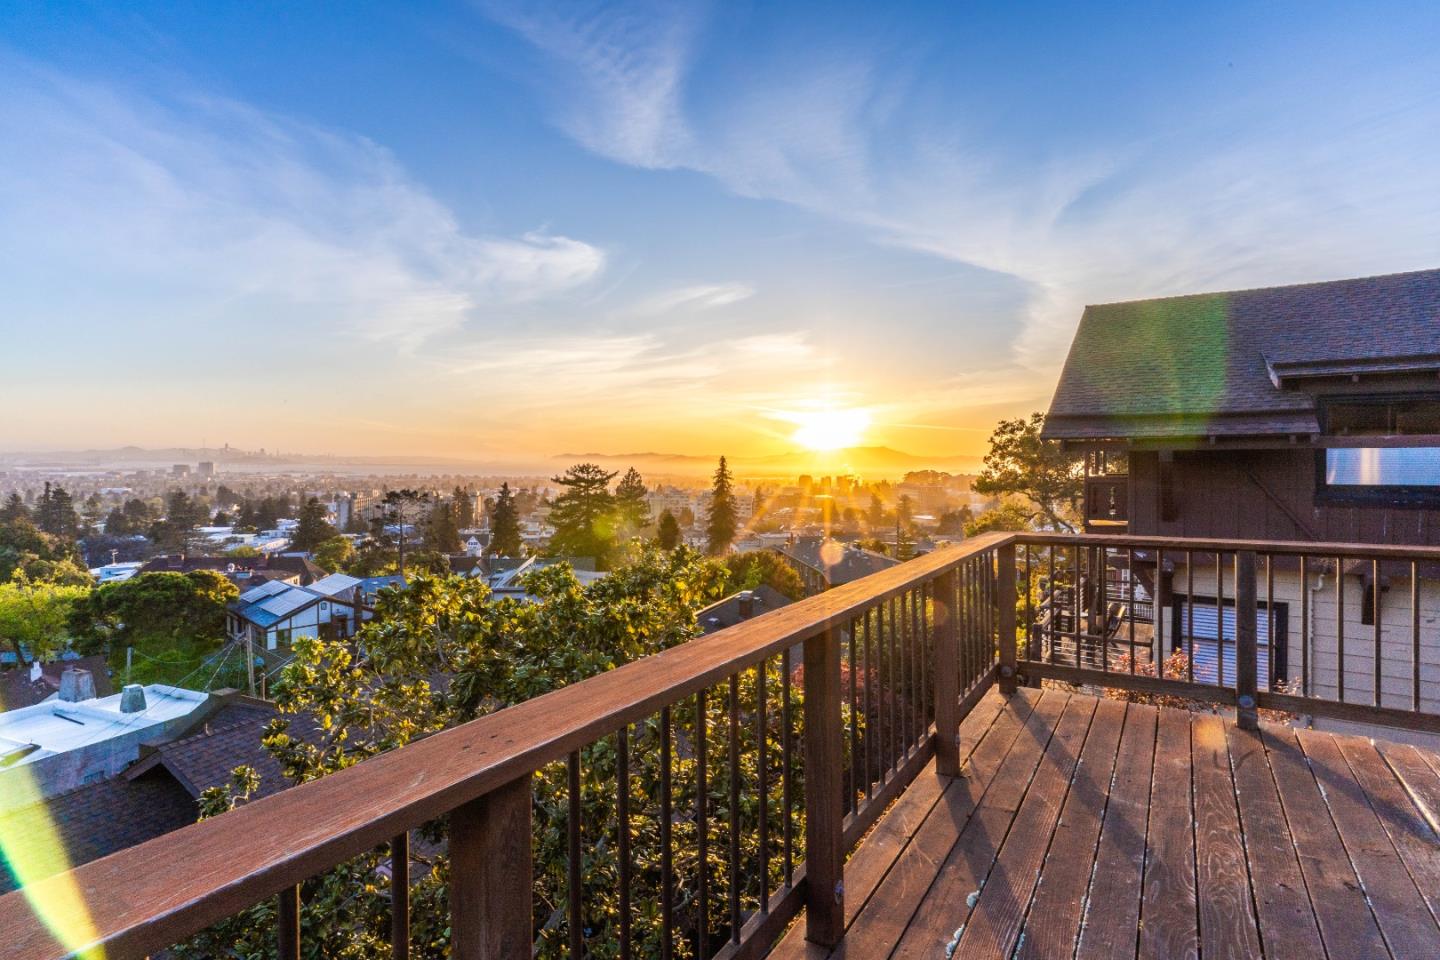 Photo of 38 Panoramic Wy in Berkeley, CA